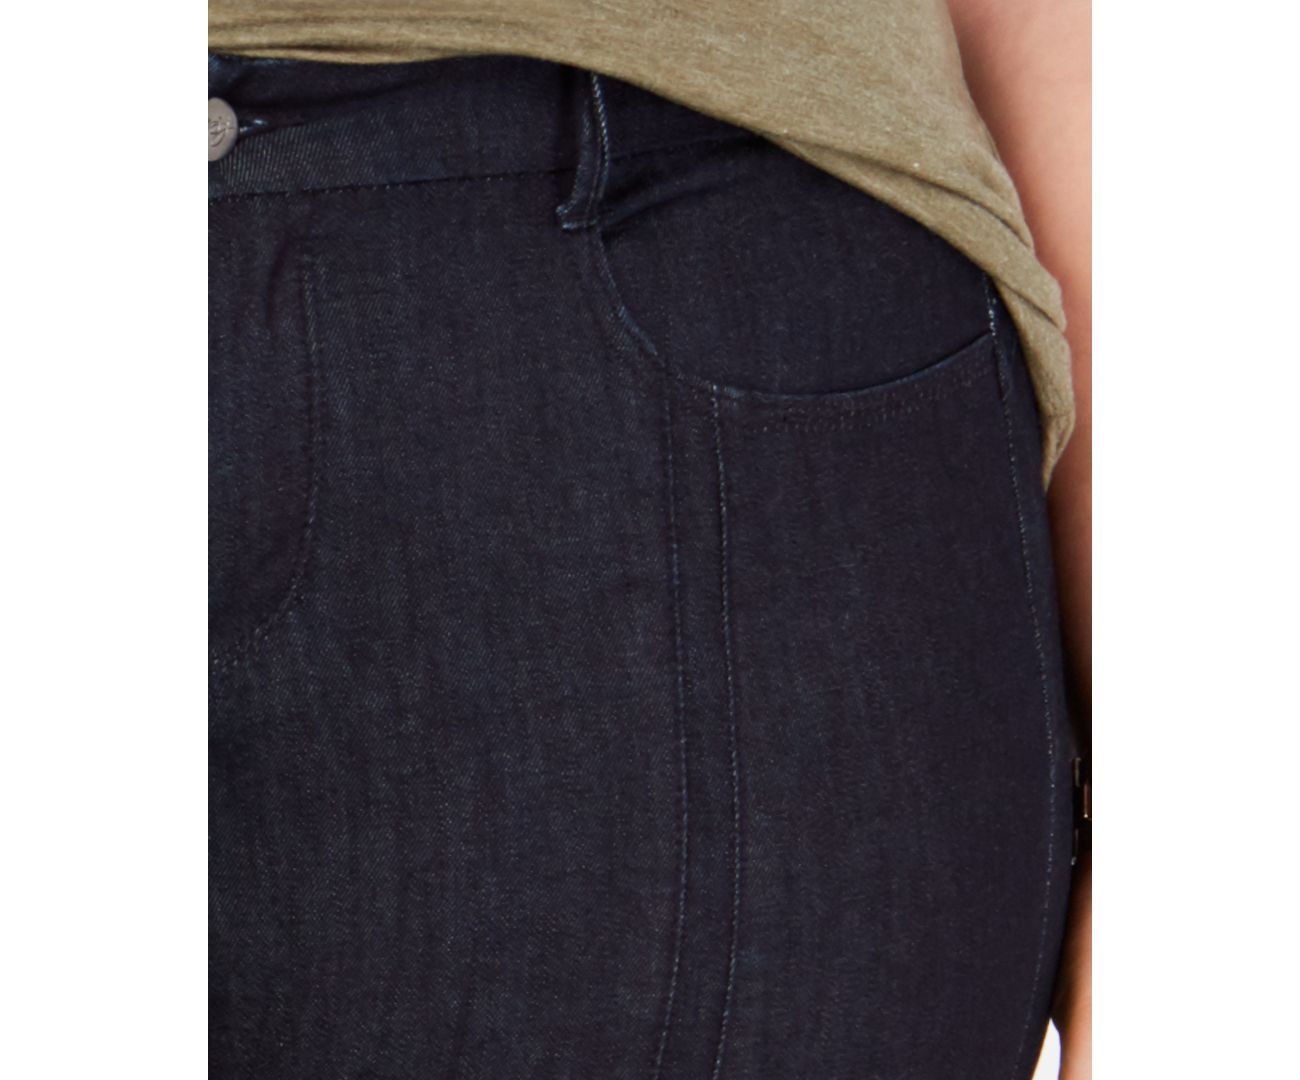 YSJ Womens Plus Size Bootcut Raw Hem Jeans